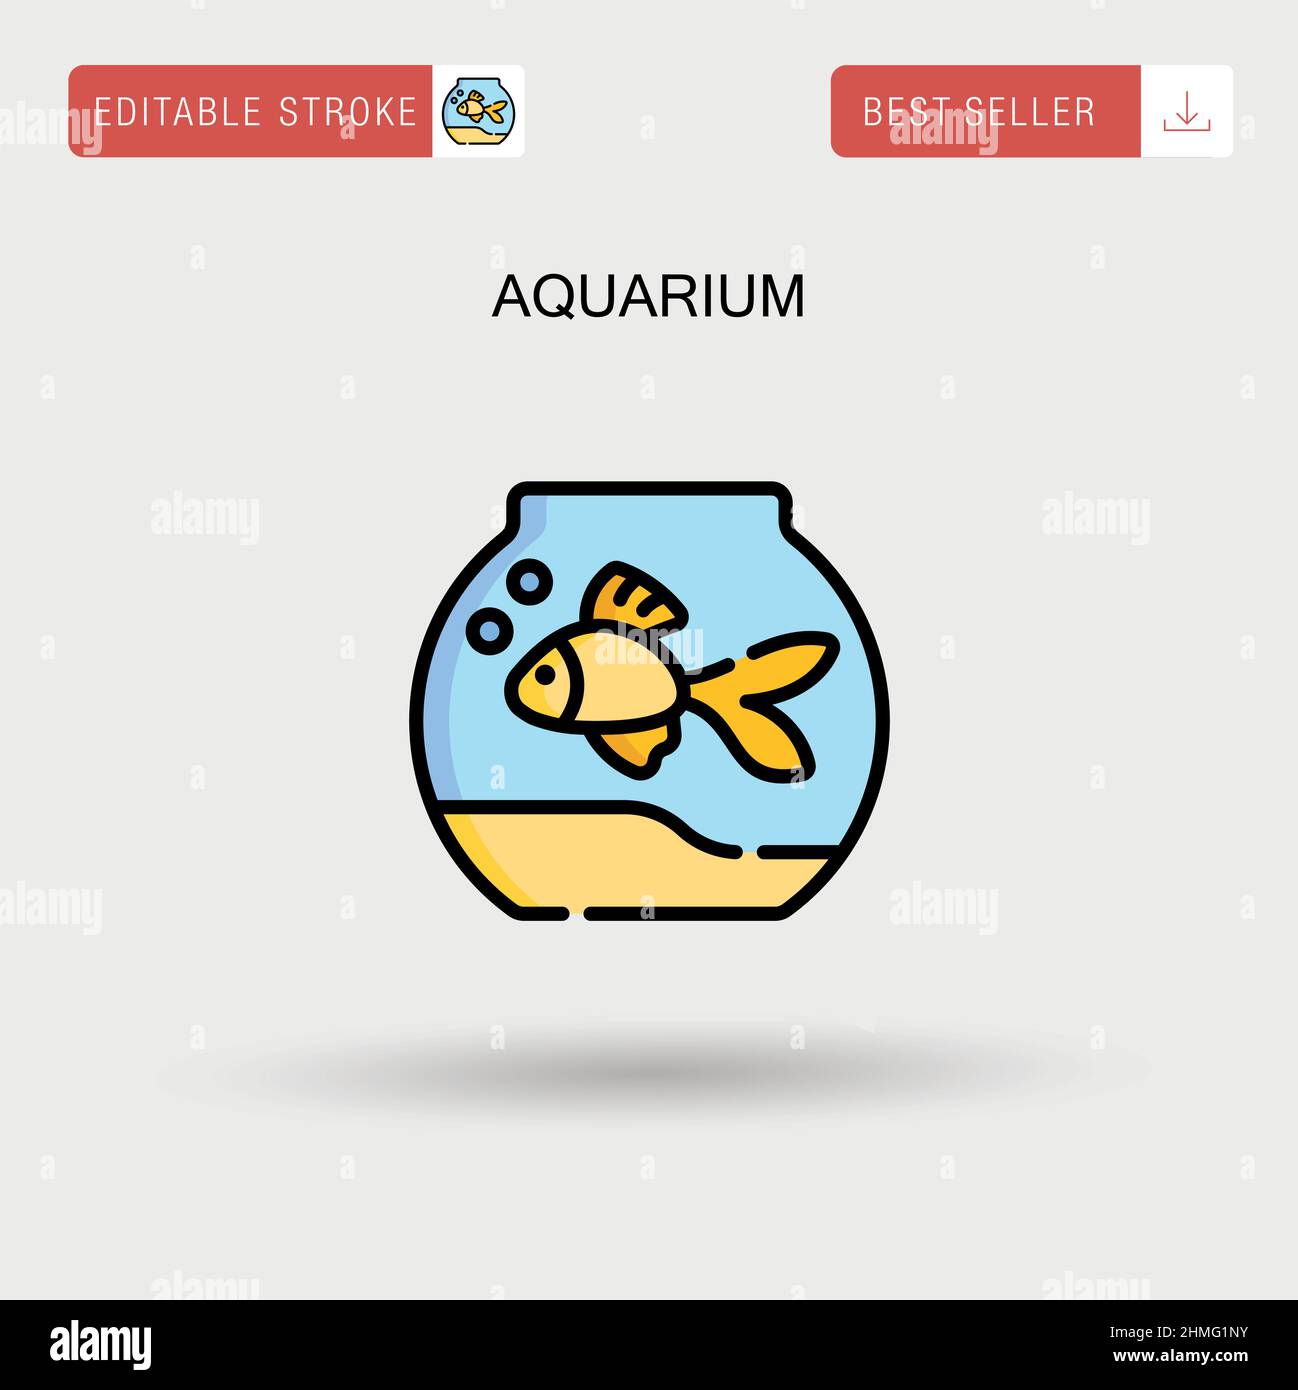 Einfaches Vektorsymbol für das Aquarium. Stock Vektor